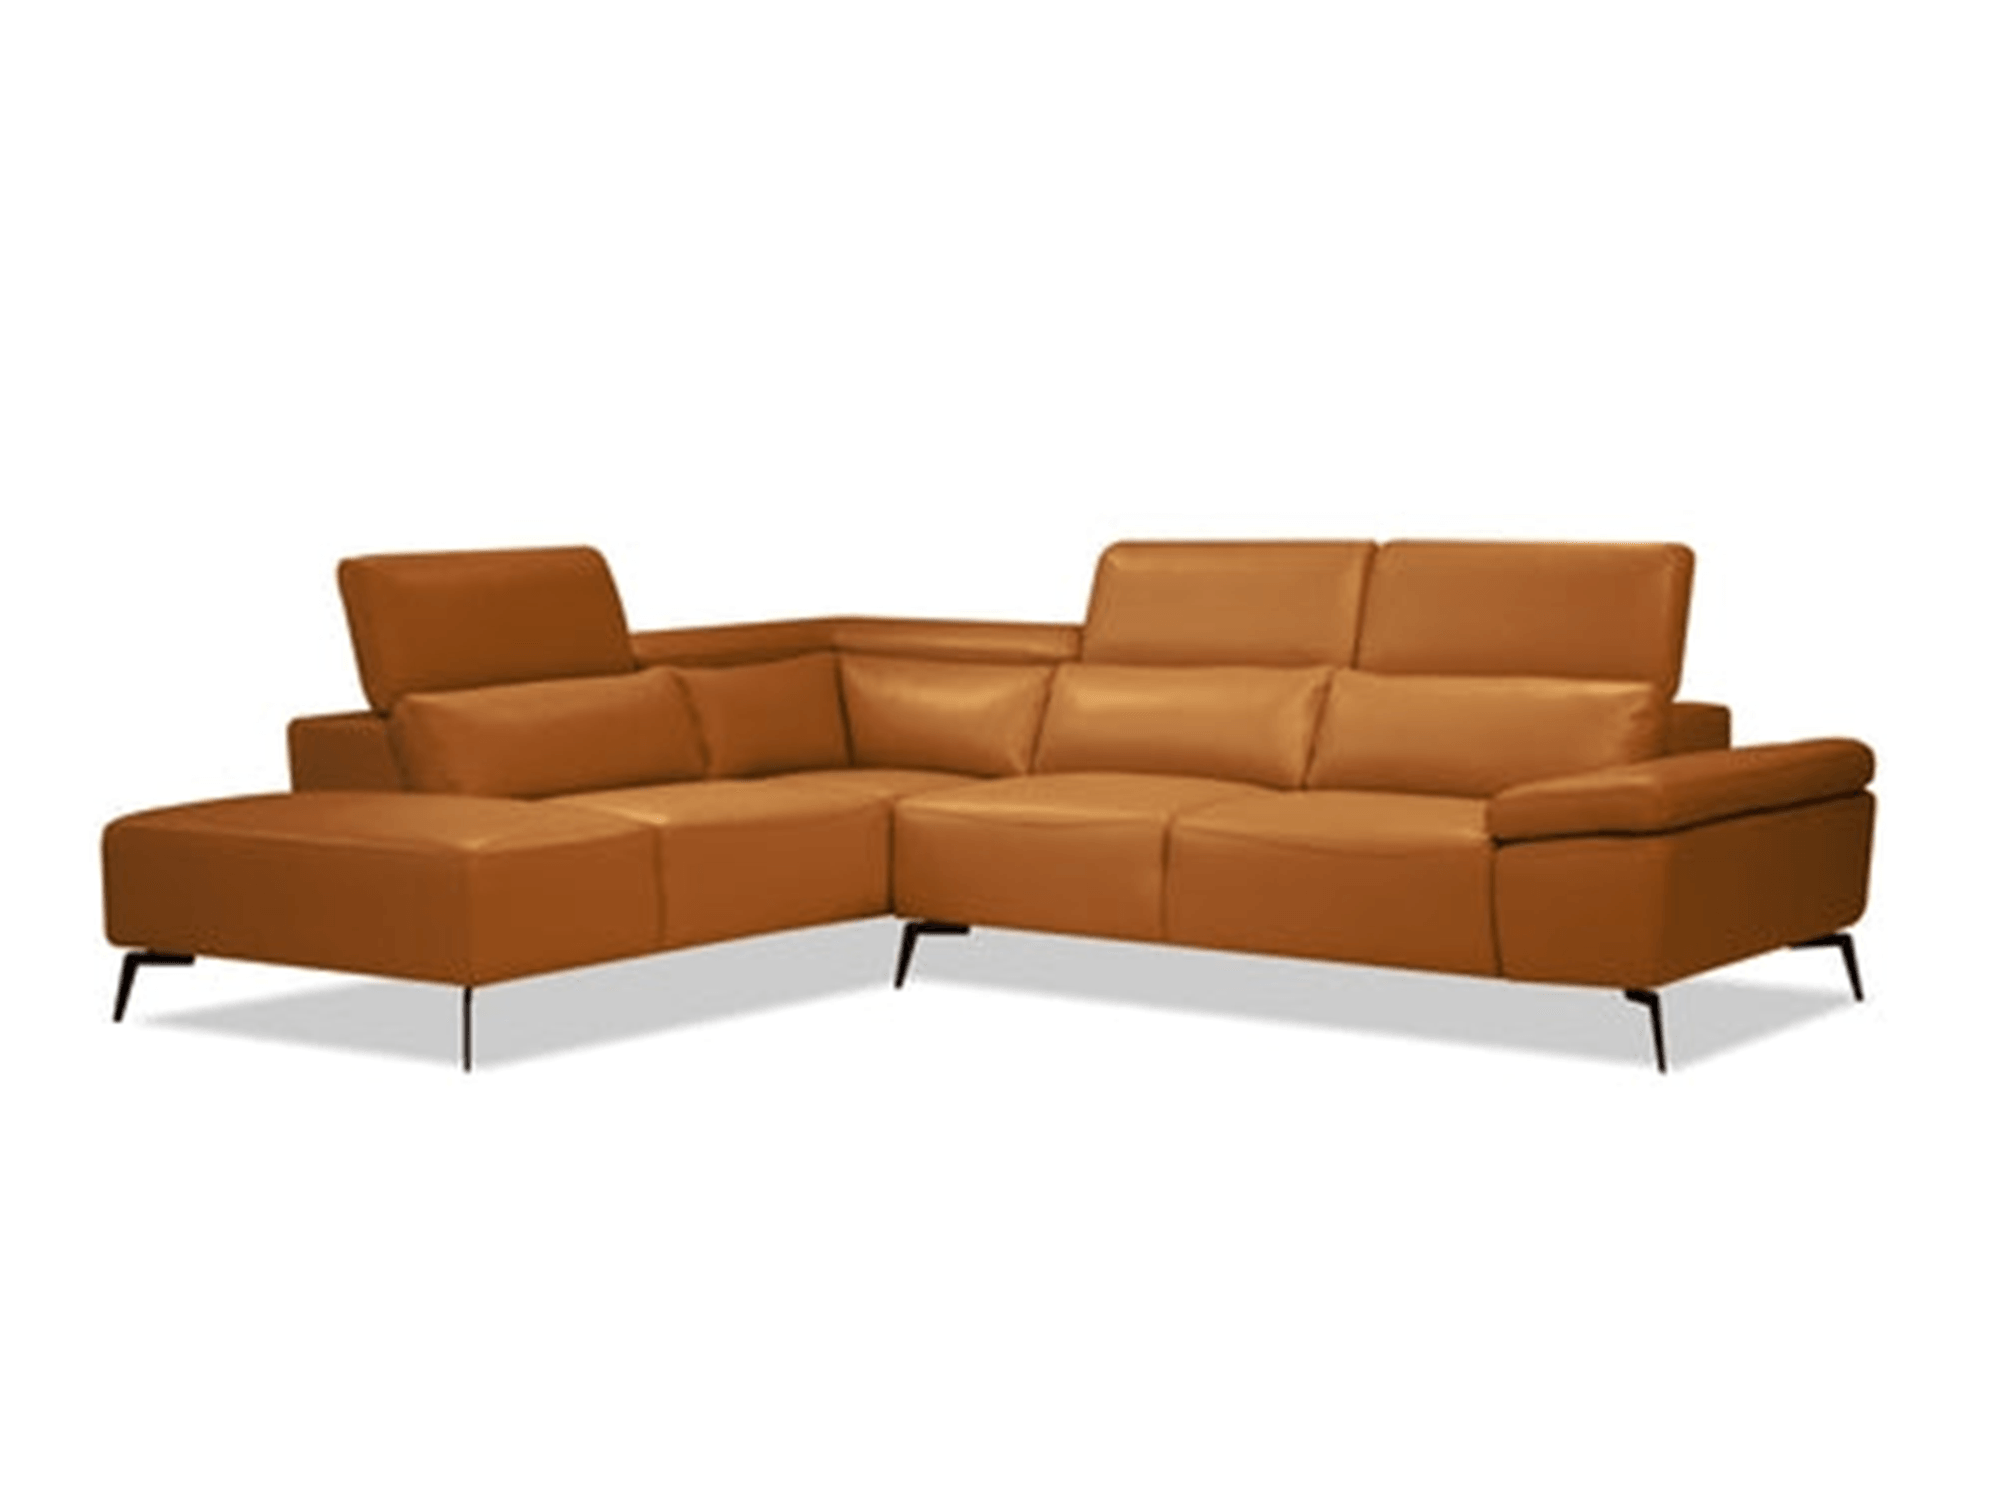 Ken Italiano Sectional - Euro Living Furniture